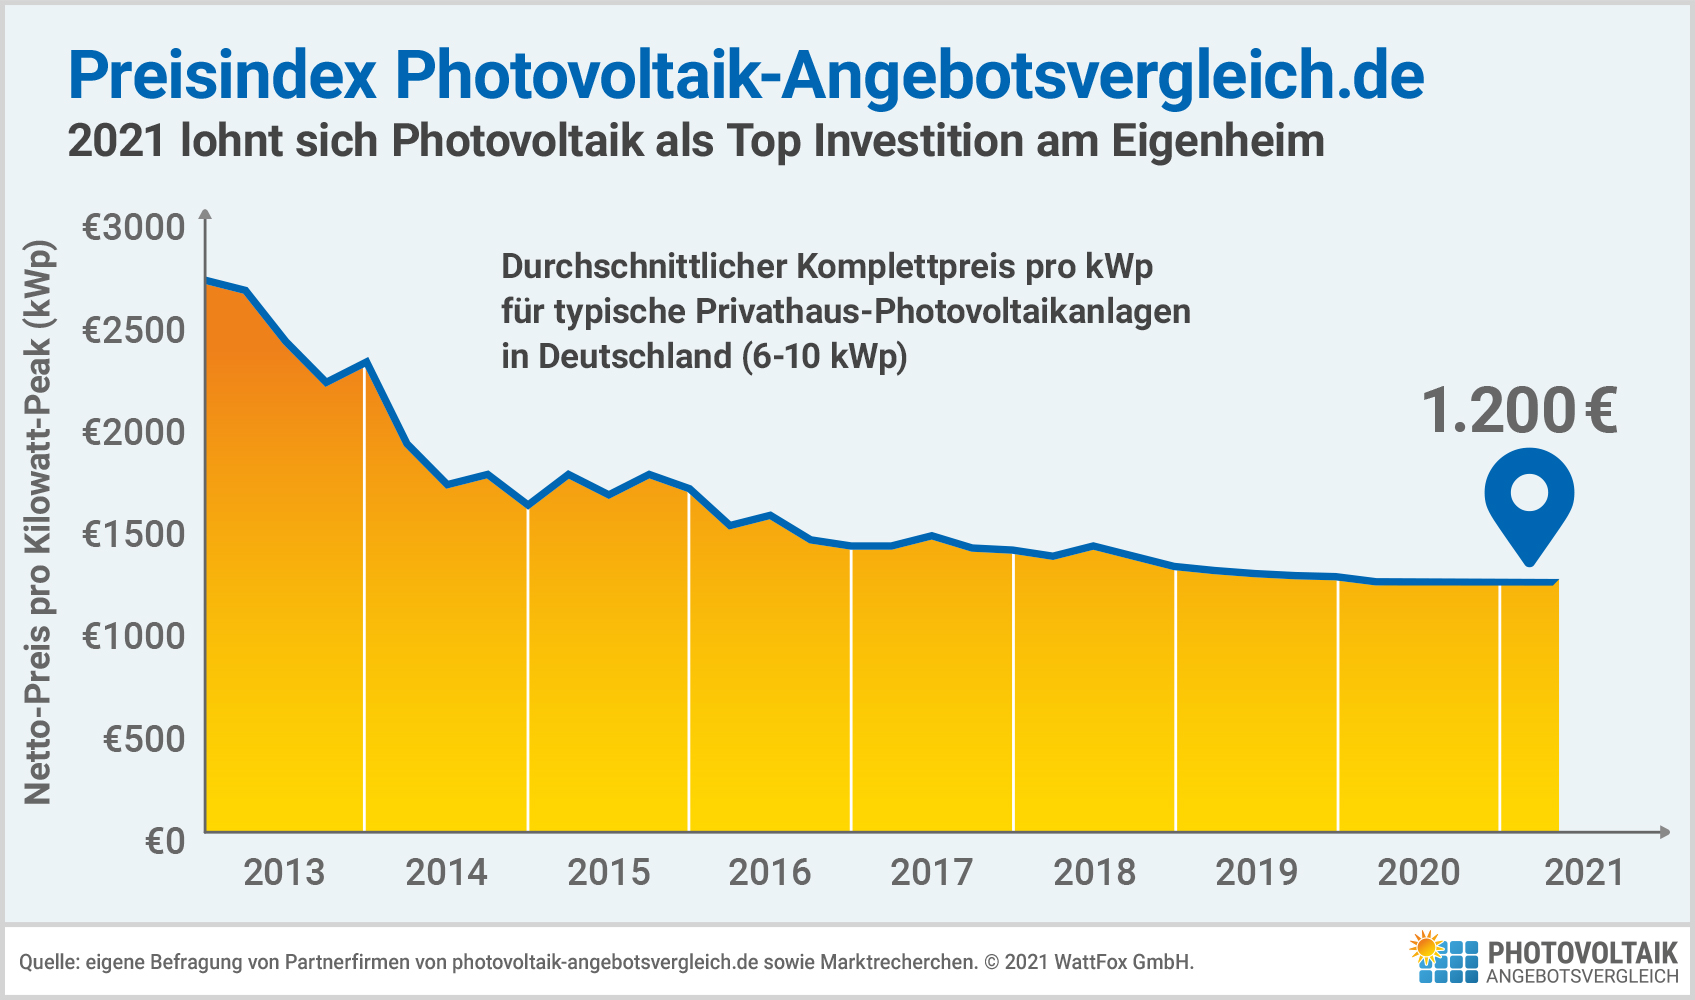 Photovoltaik-Angebotsvergleich.de Preisindex